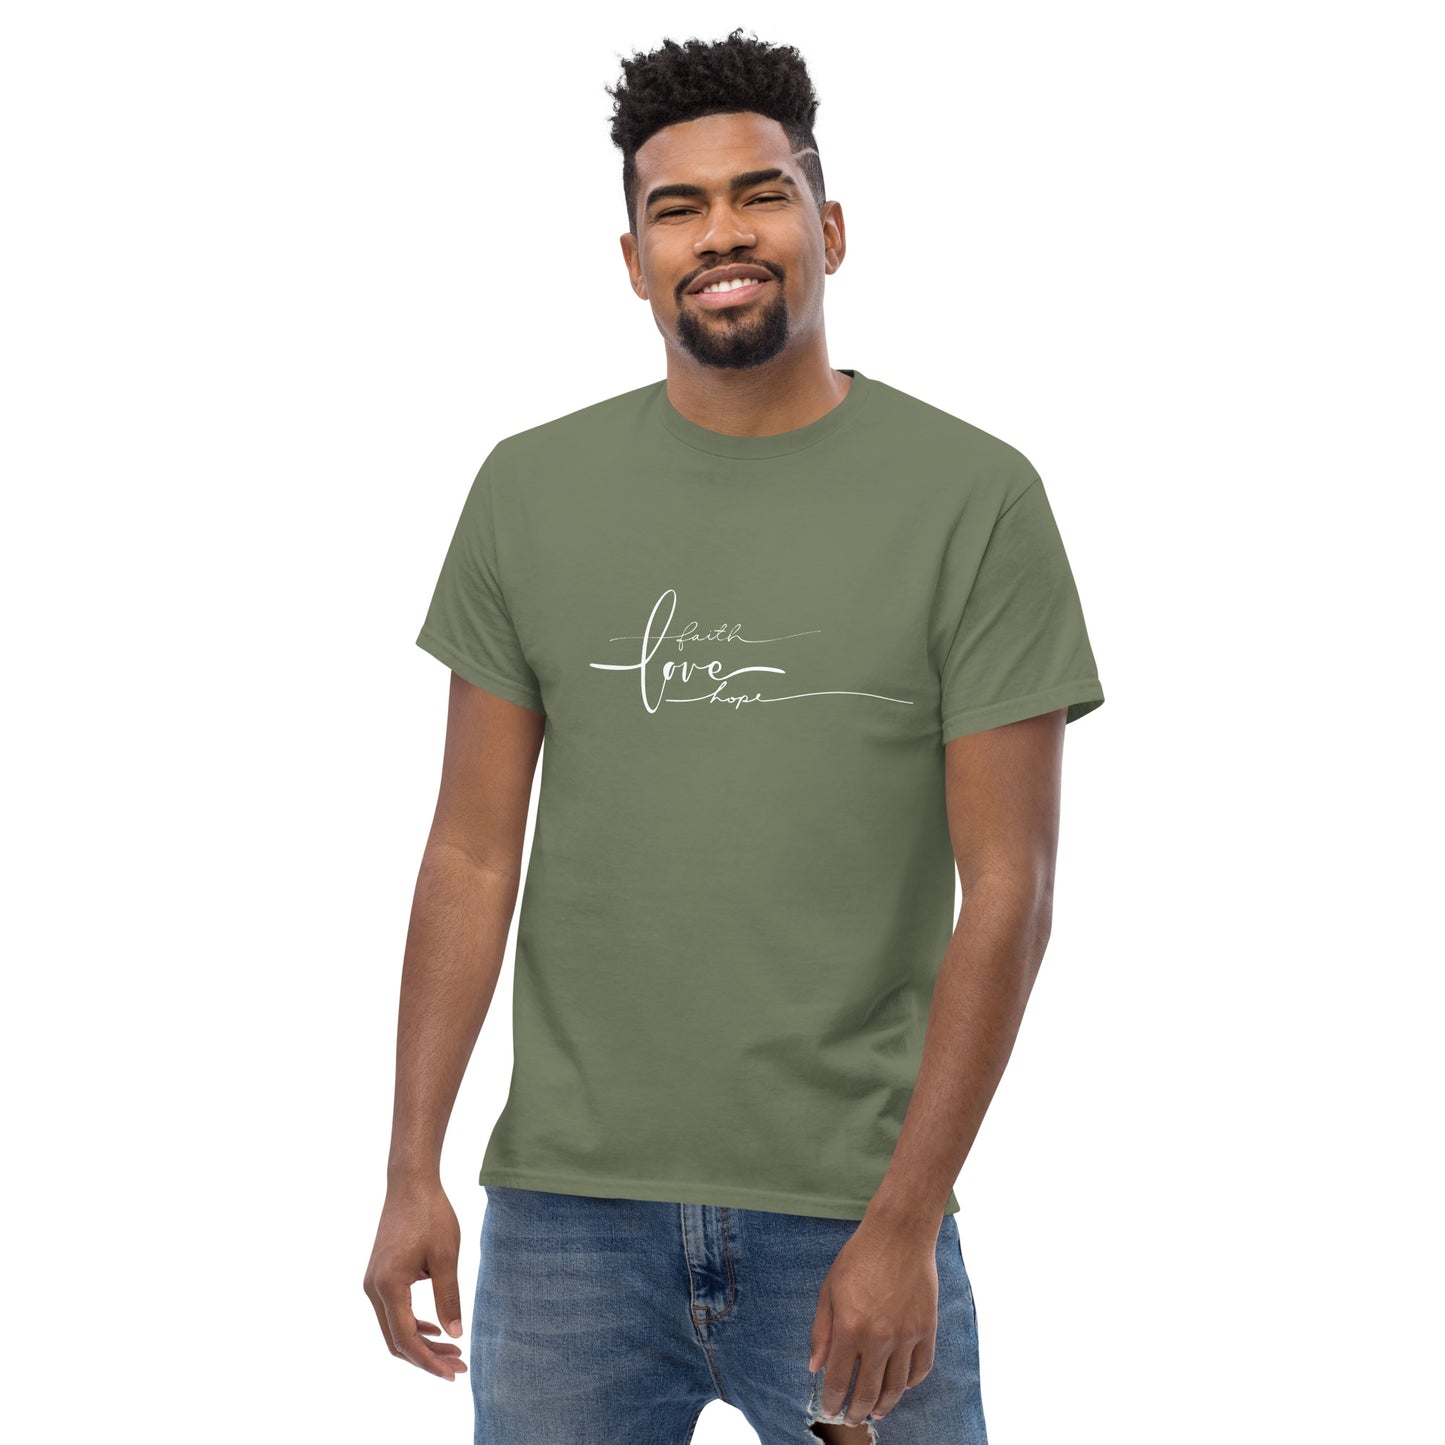 Men's classic Faith Hope Love t shirt